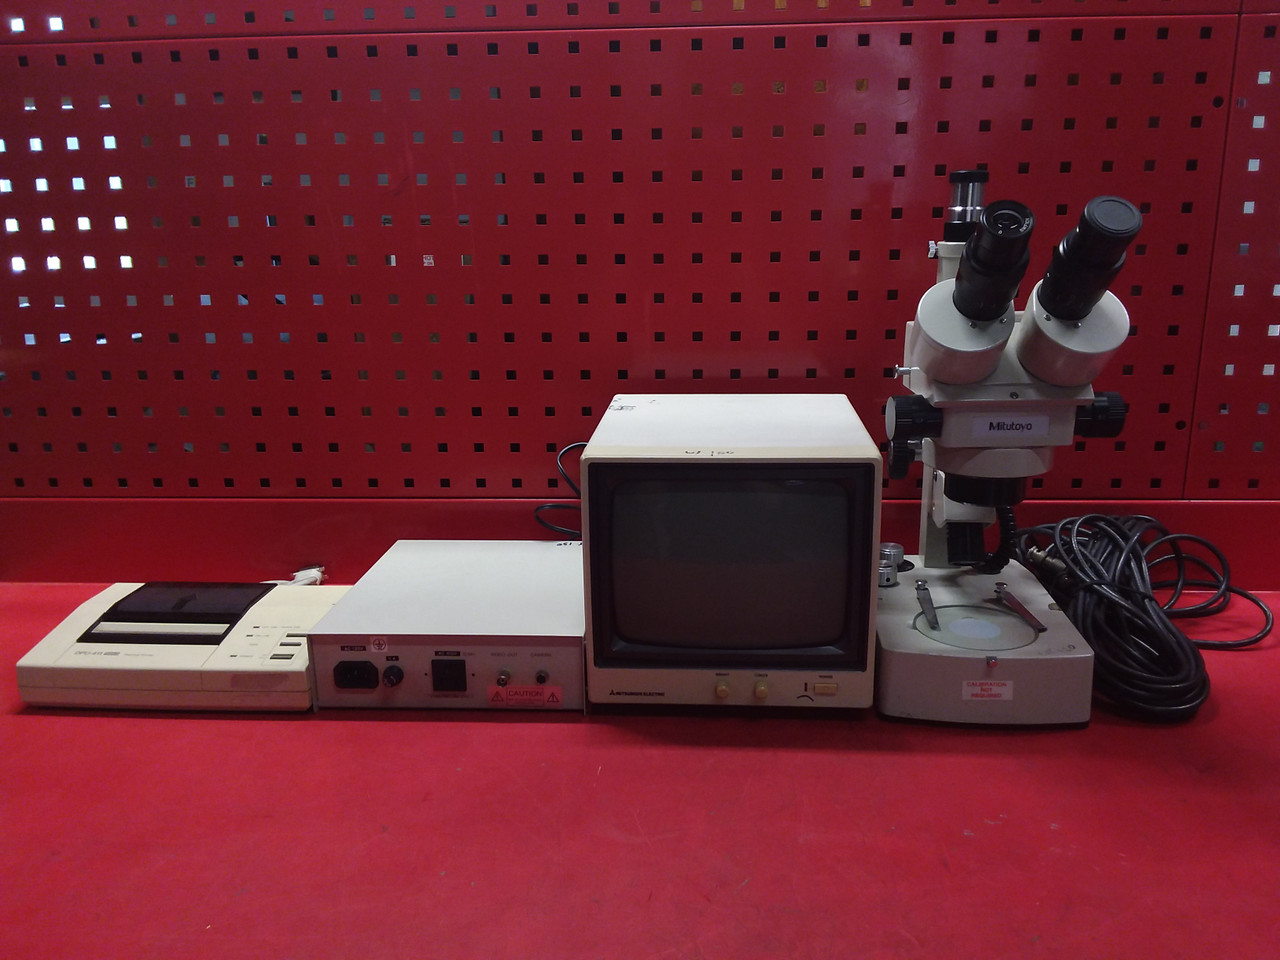 Lab Station - Mitutoyo 62951 Microscope Seiko Thermal Printer, Mitutoyo CCD TV Camera PS, Mitsubishi Electric M-0913F